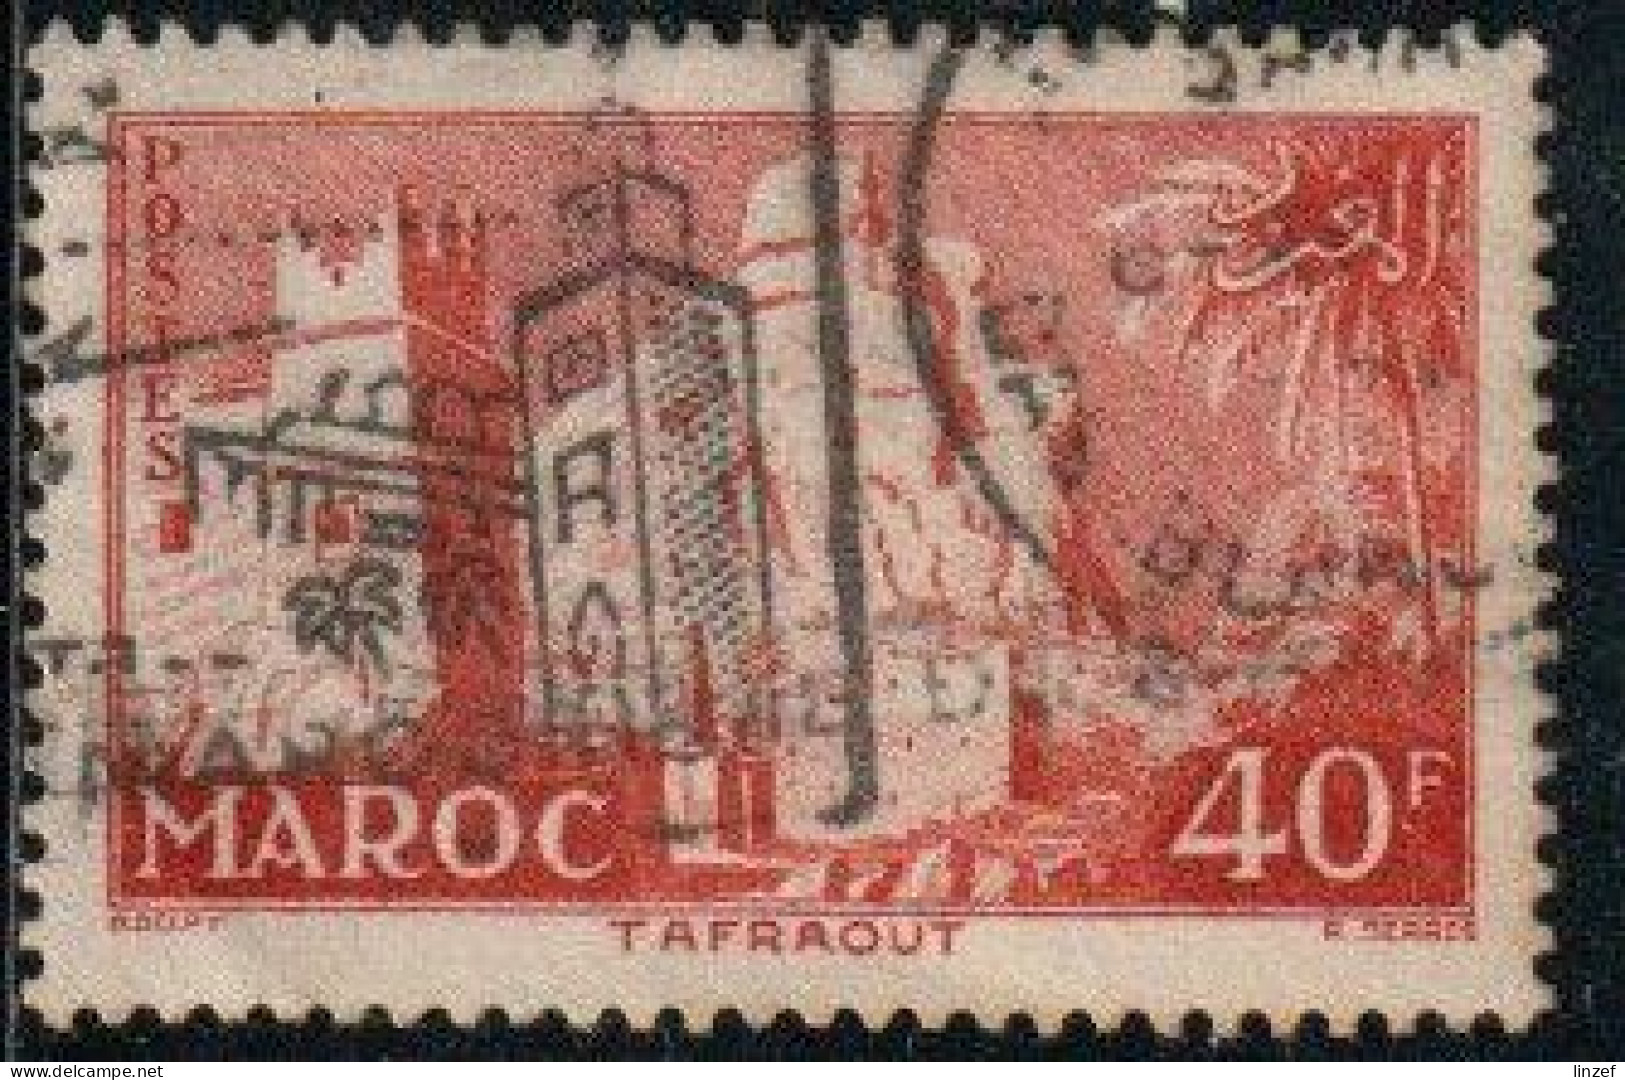 Maroc 1955 Yv. N°359 - 40f Rouge-brun Tafraout - Oblitéré - Usati